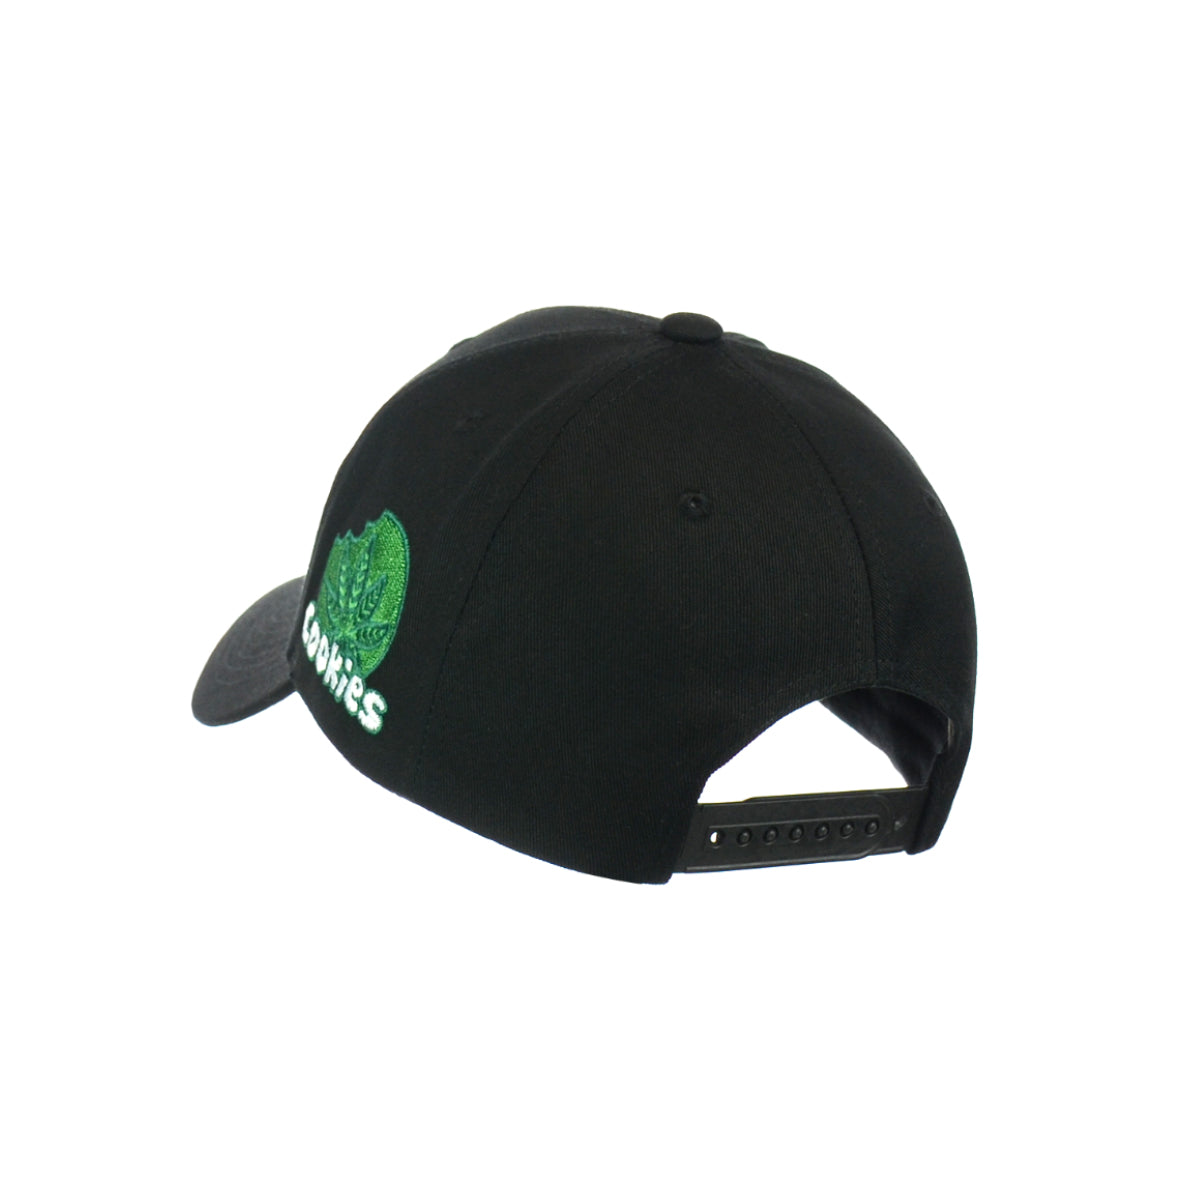 C-Cannabis Leaf Embroidered Snapback Hat